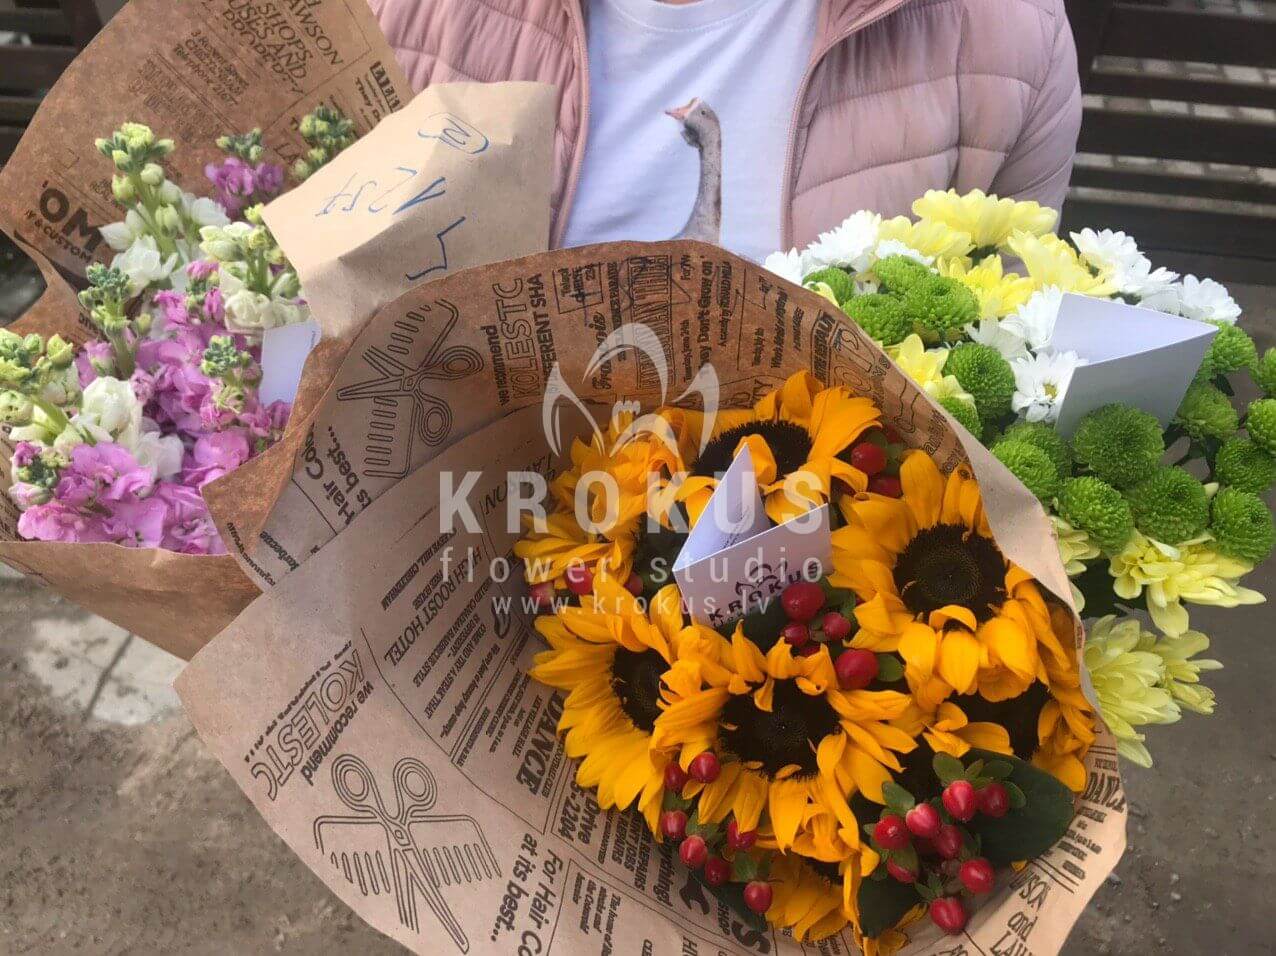 Deliver flowers to Katlakalns (freesiapistaciasunflowersmeadow flowerschrysanthemumshypericumveronica)